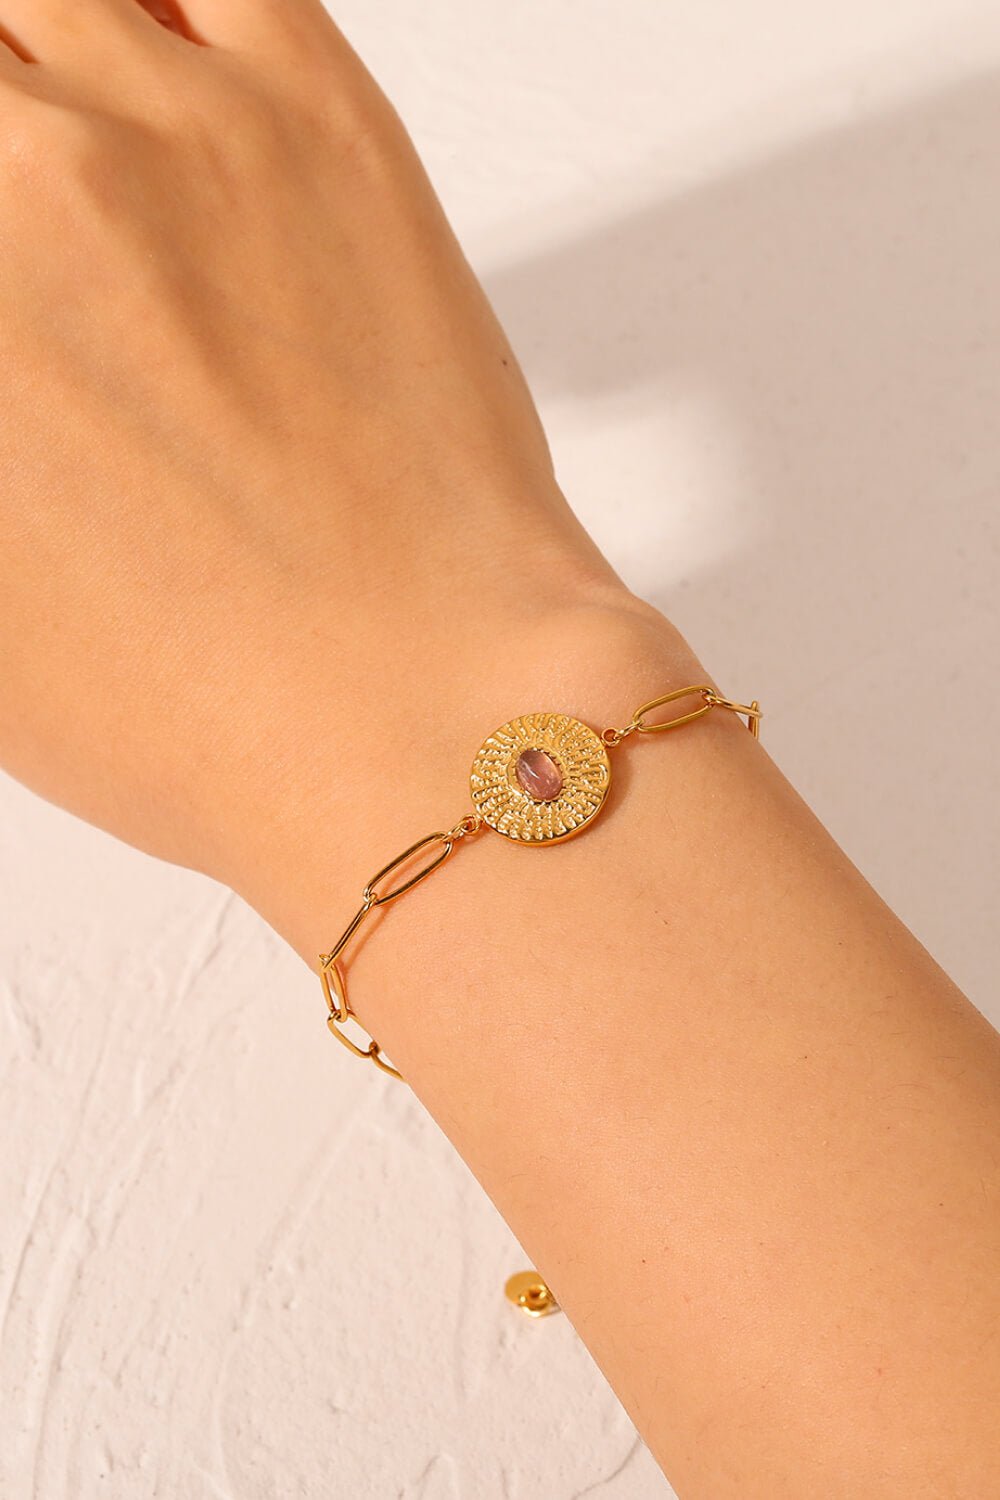 18K Gold Plated Paperclip Chain Bracelet in PinkBraceletBeach Rose Co.